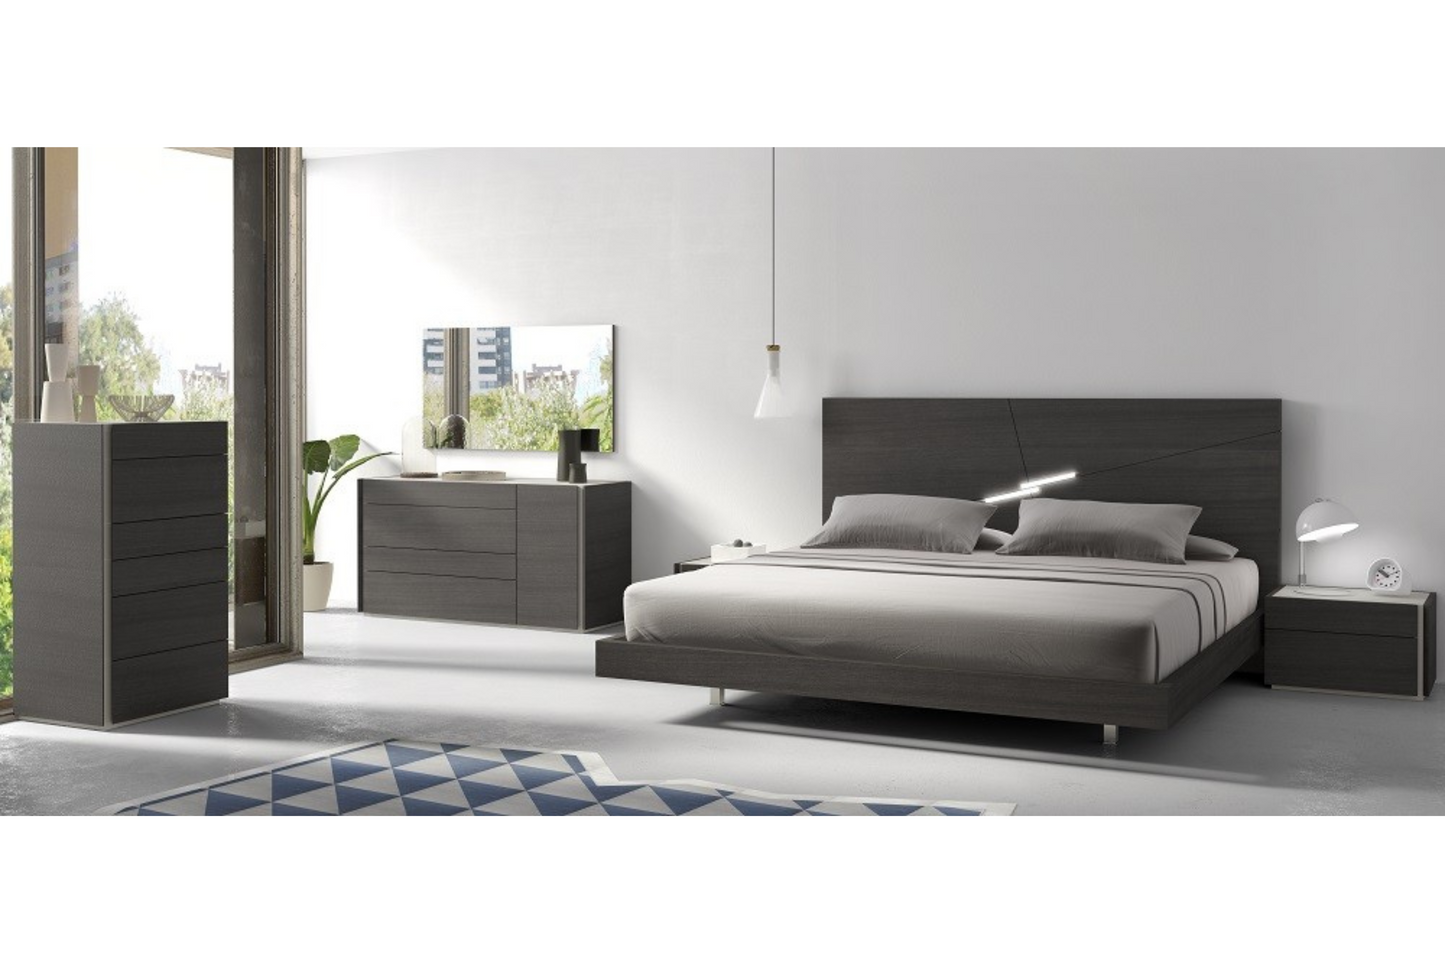 Faro Premium Bedroom Bed SKU: 17868